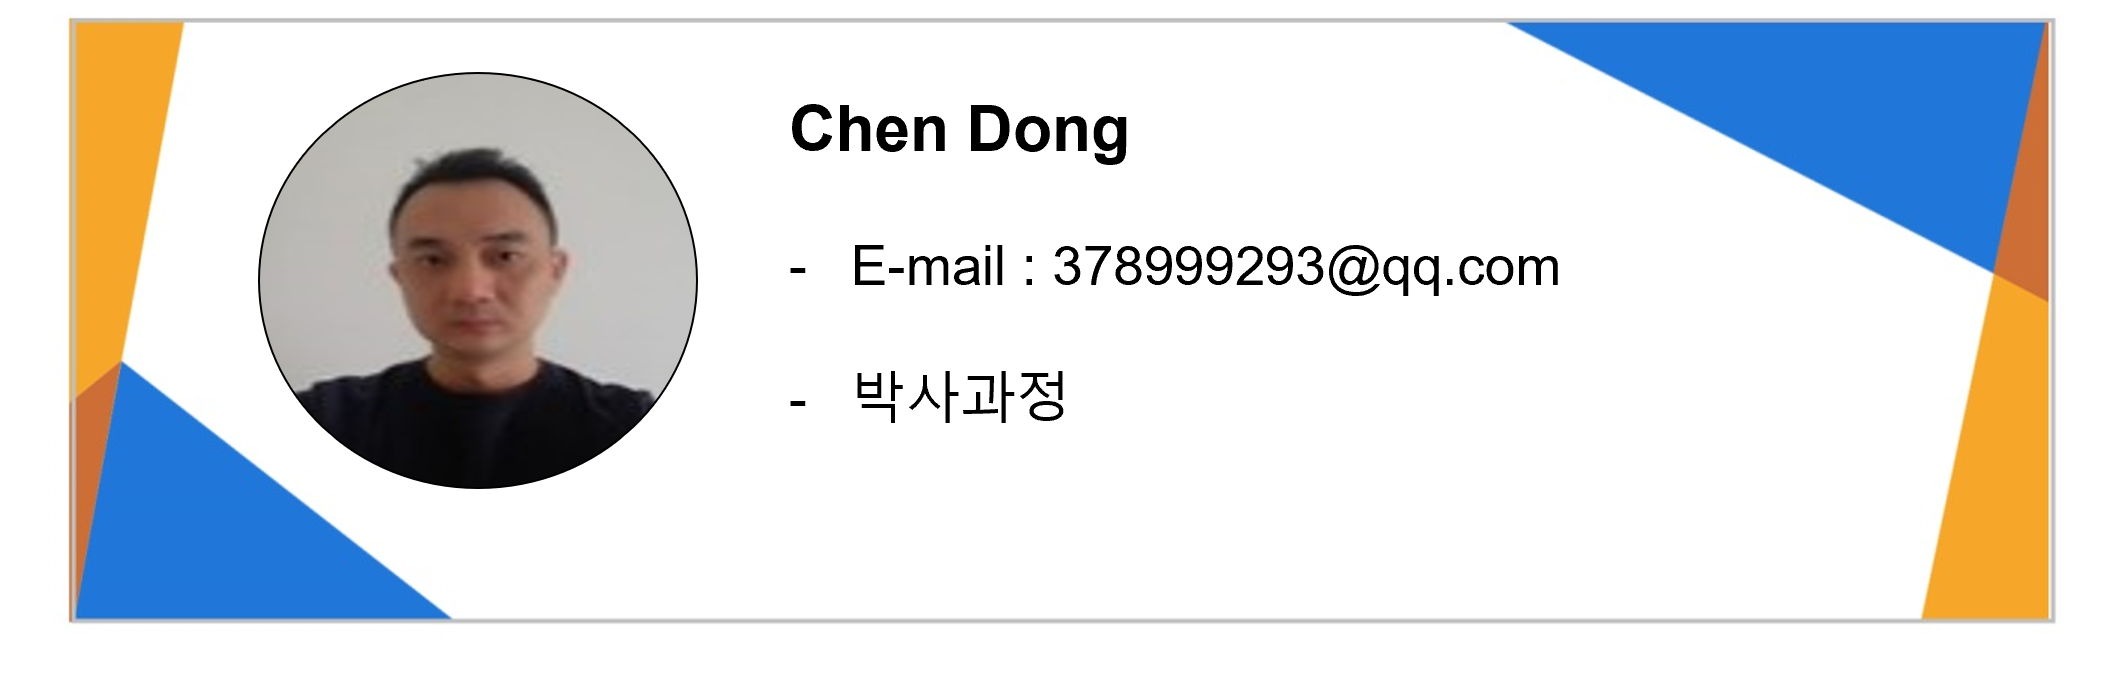 ChenDong